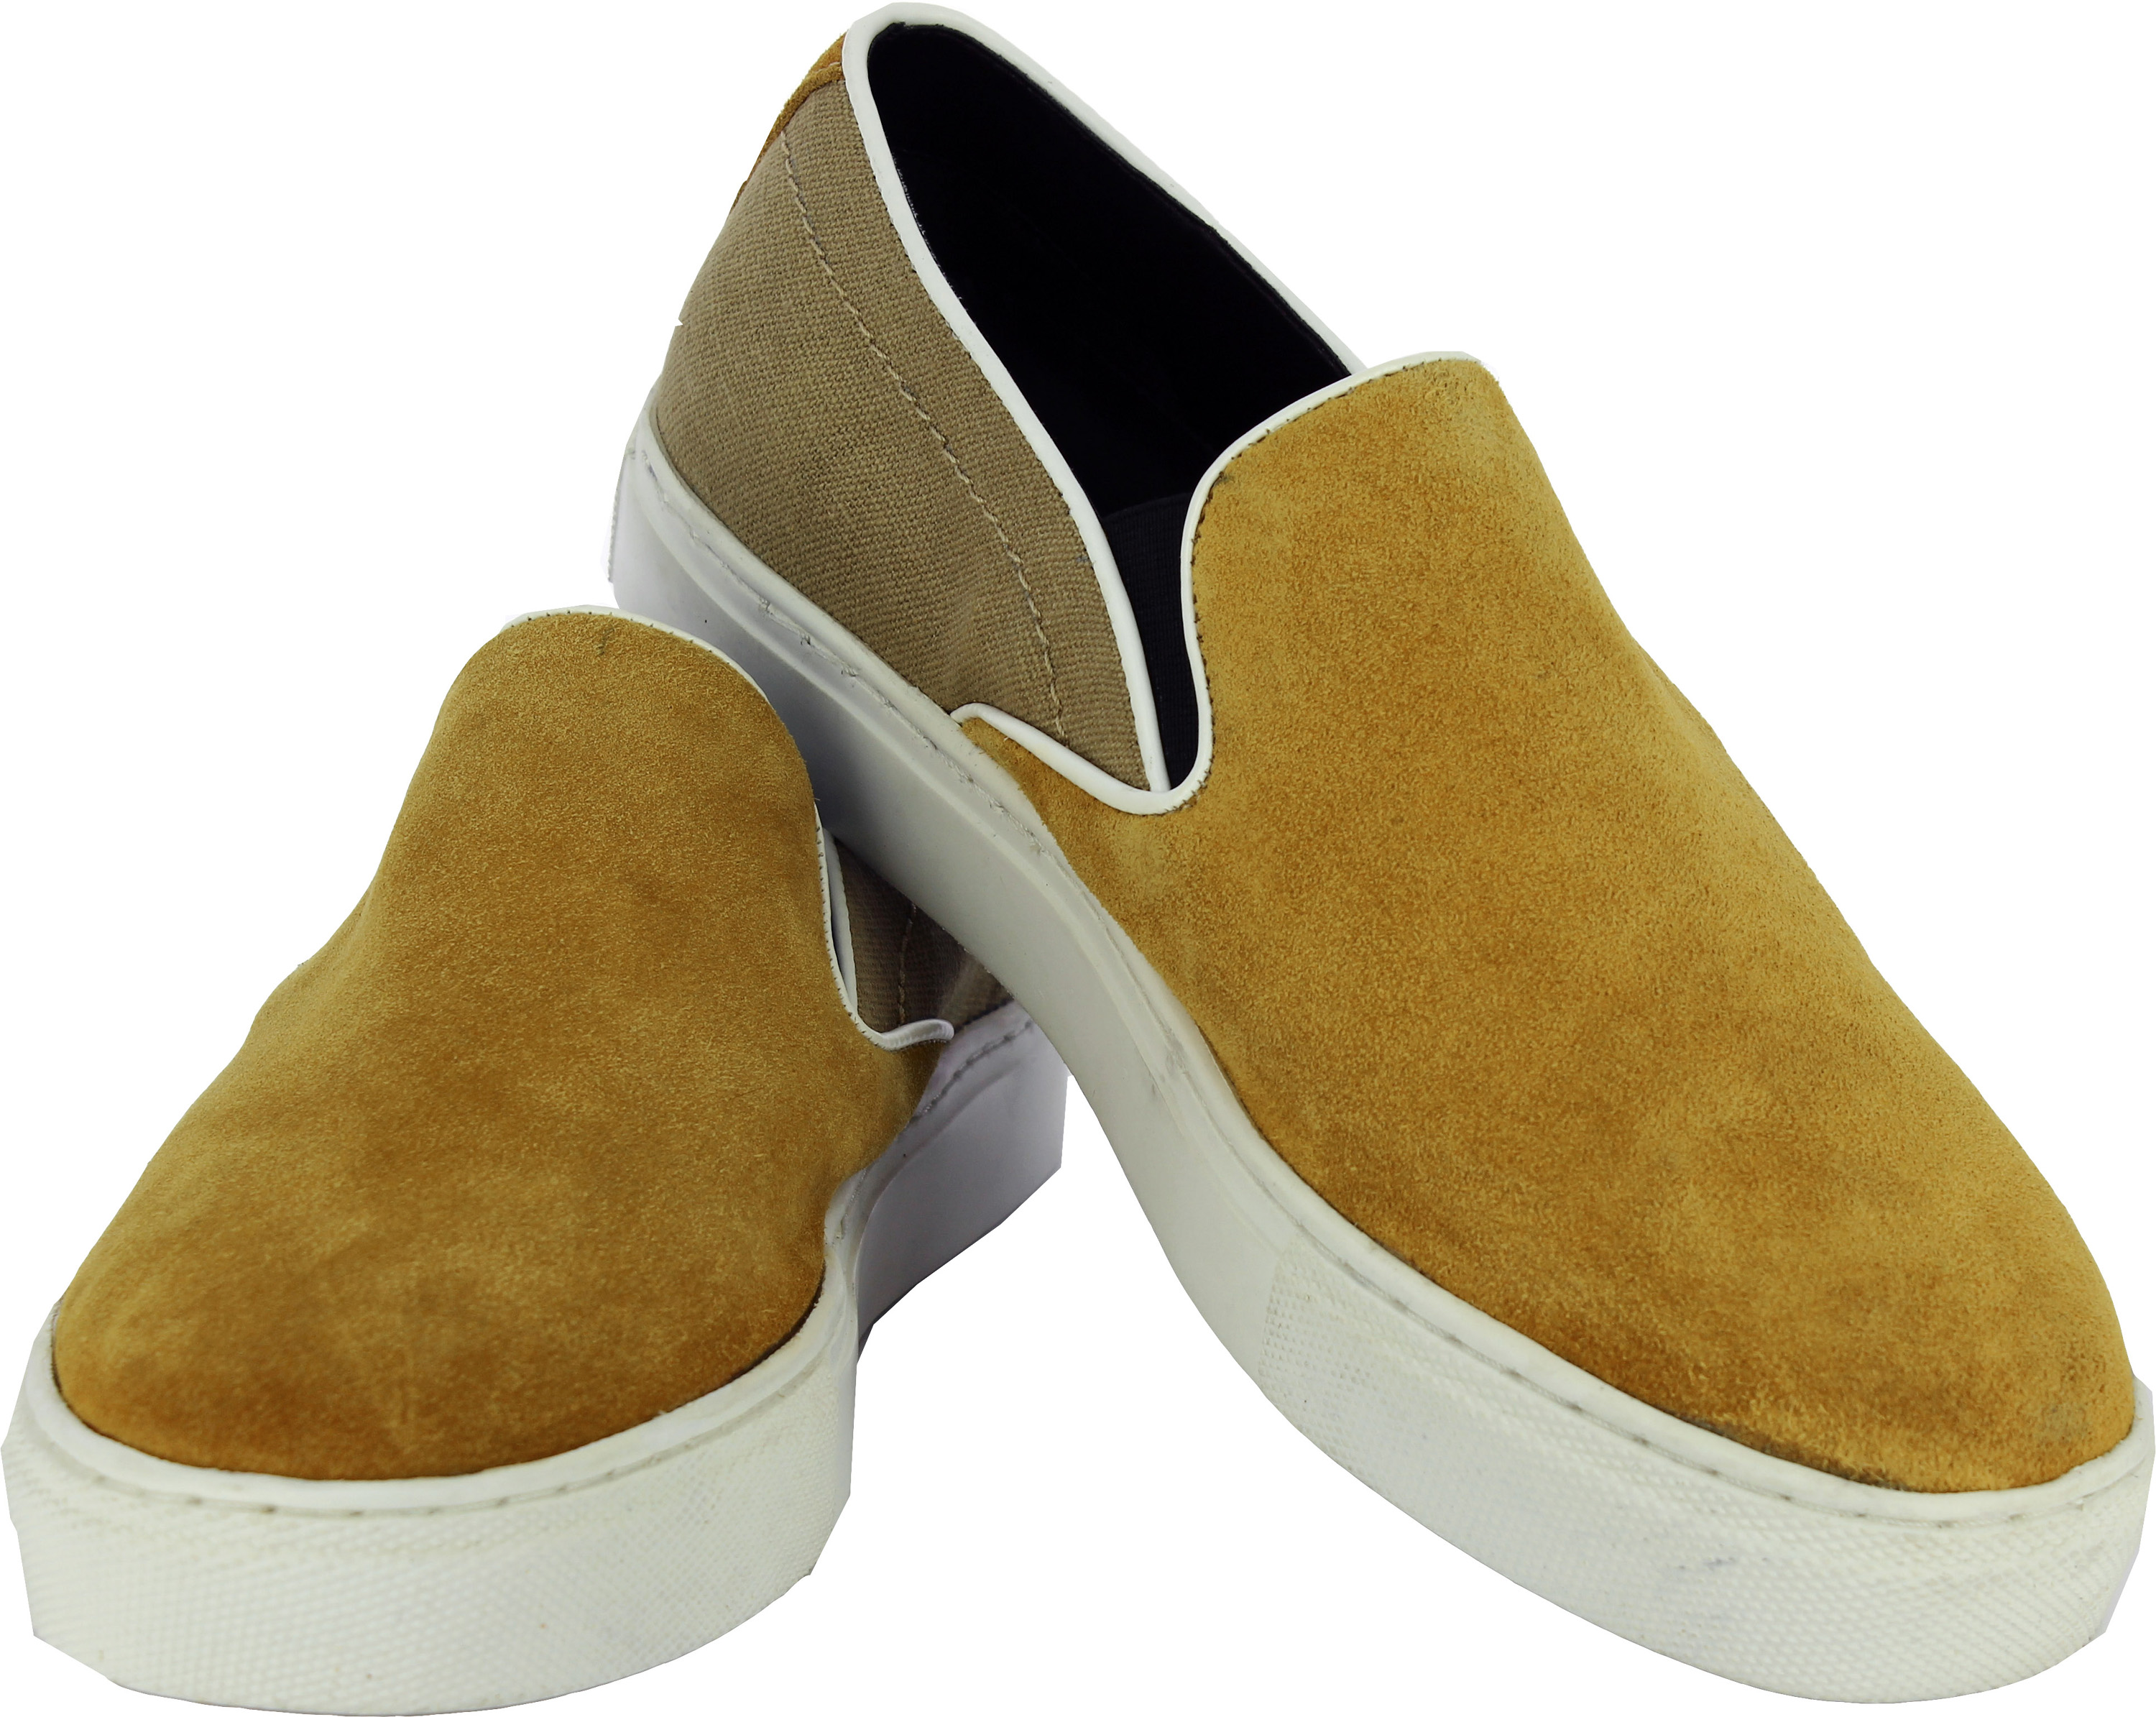 Alberto-Torresi-Saputo-Yellow-Casual-Shoes-Price-Rs-2995